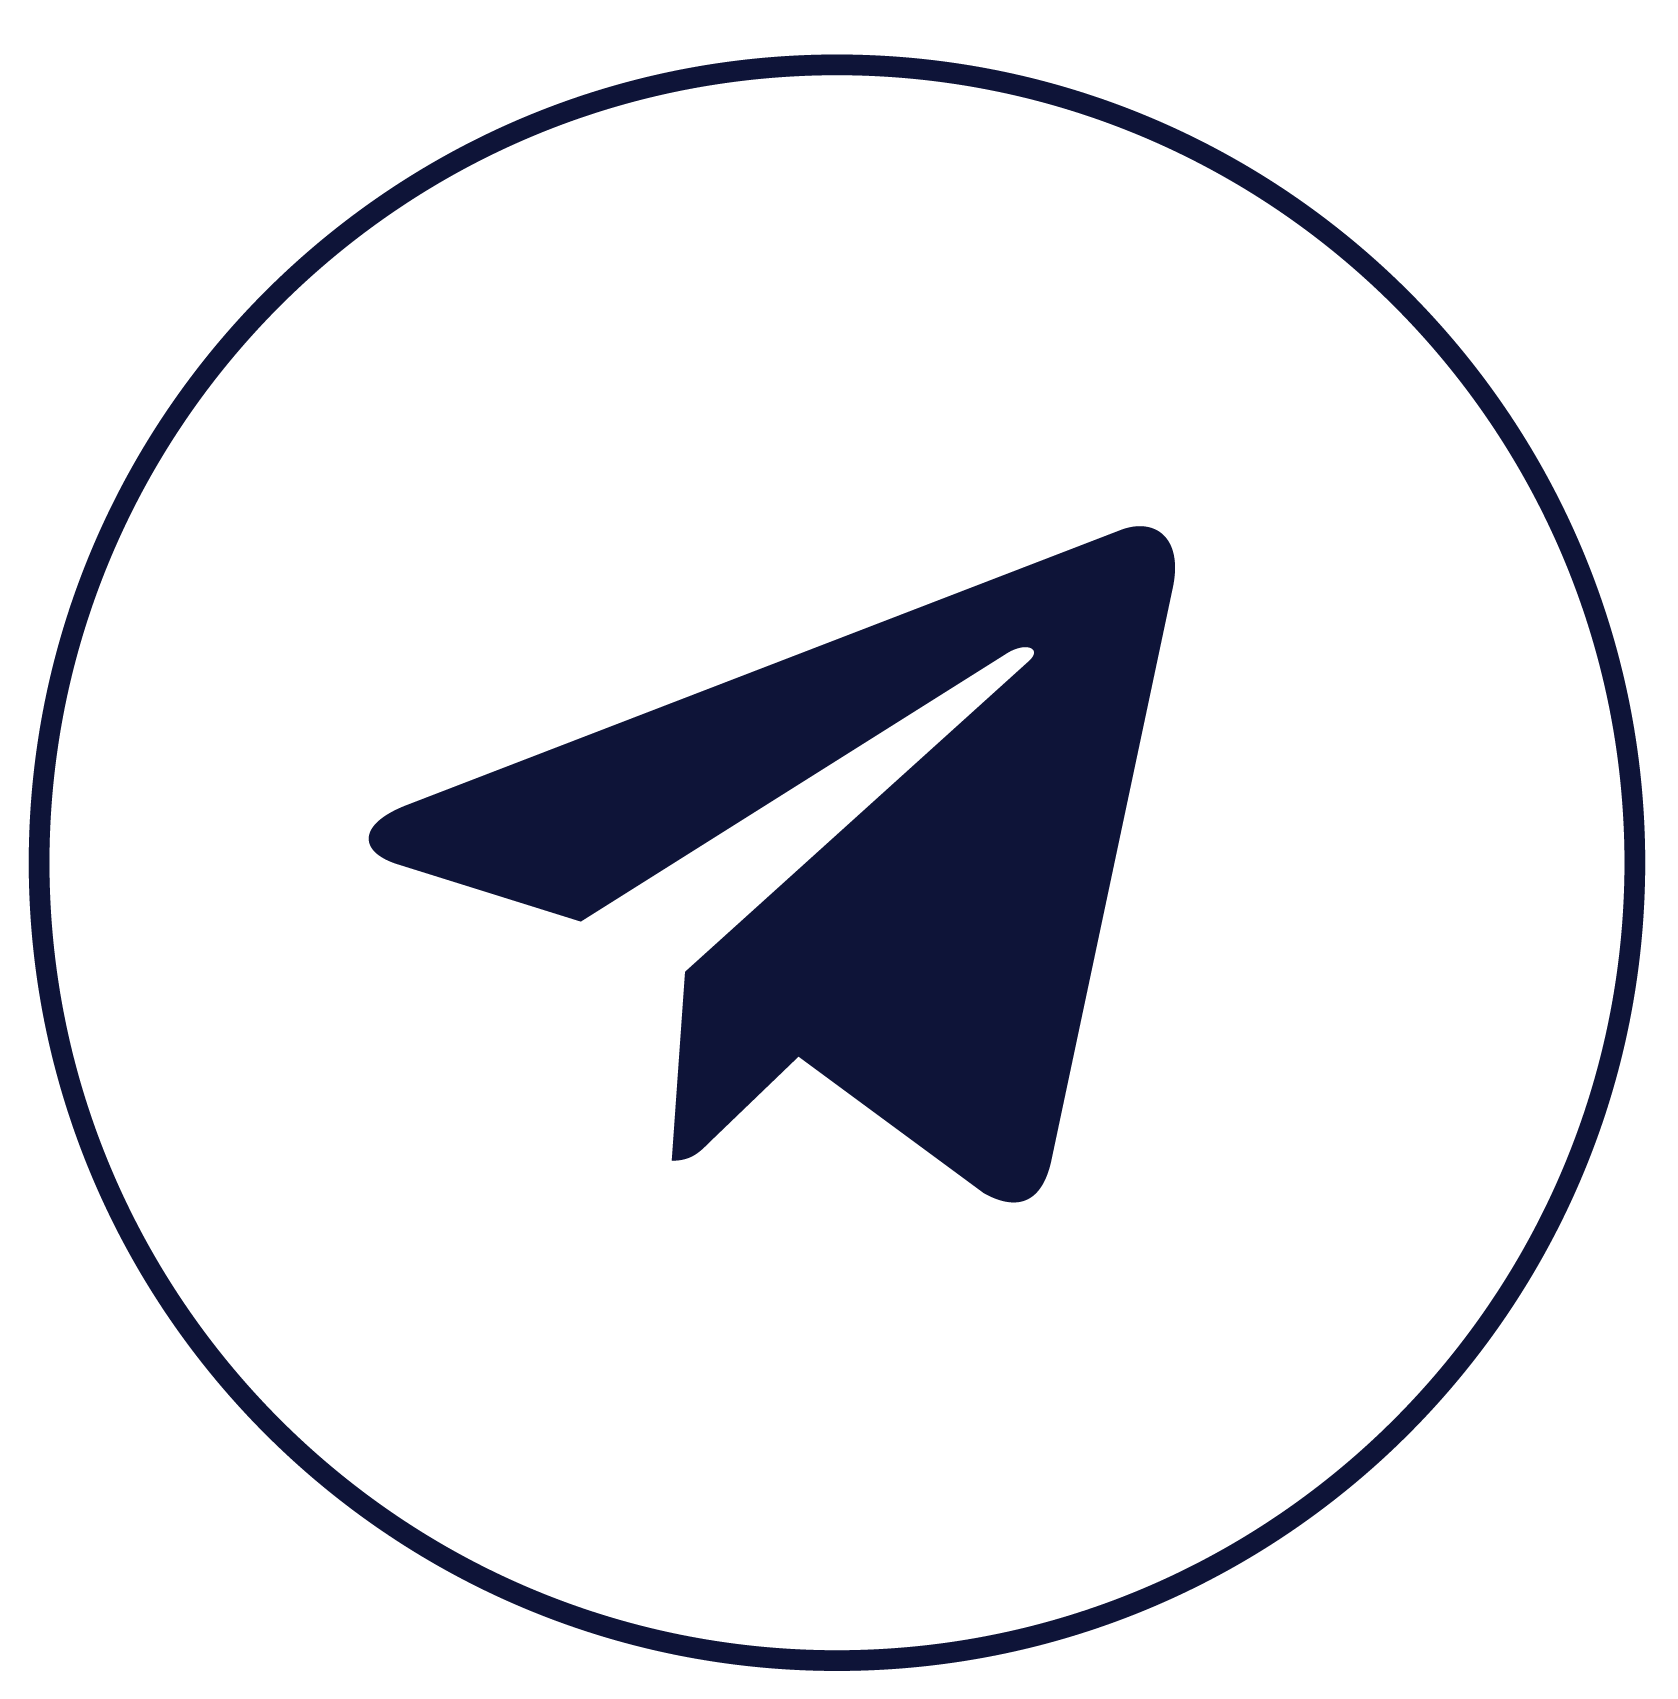 Telegram collection